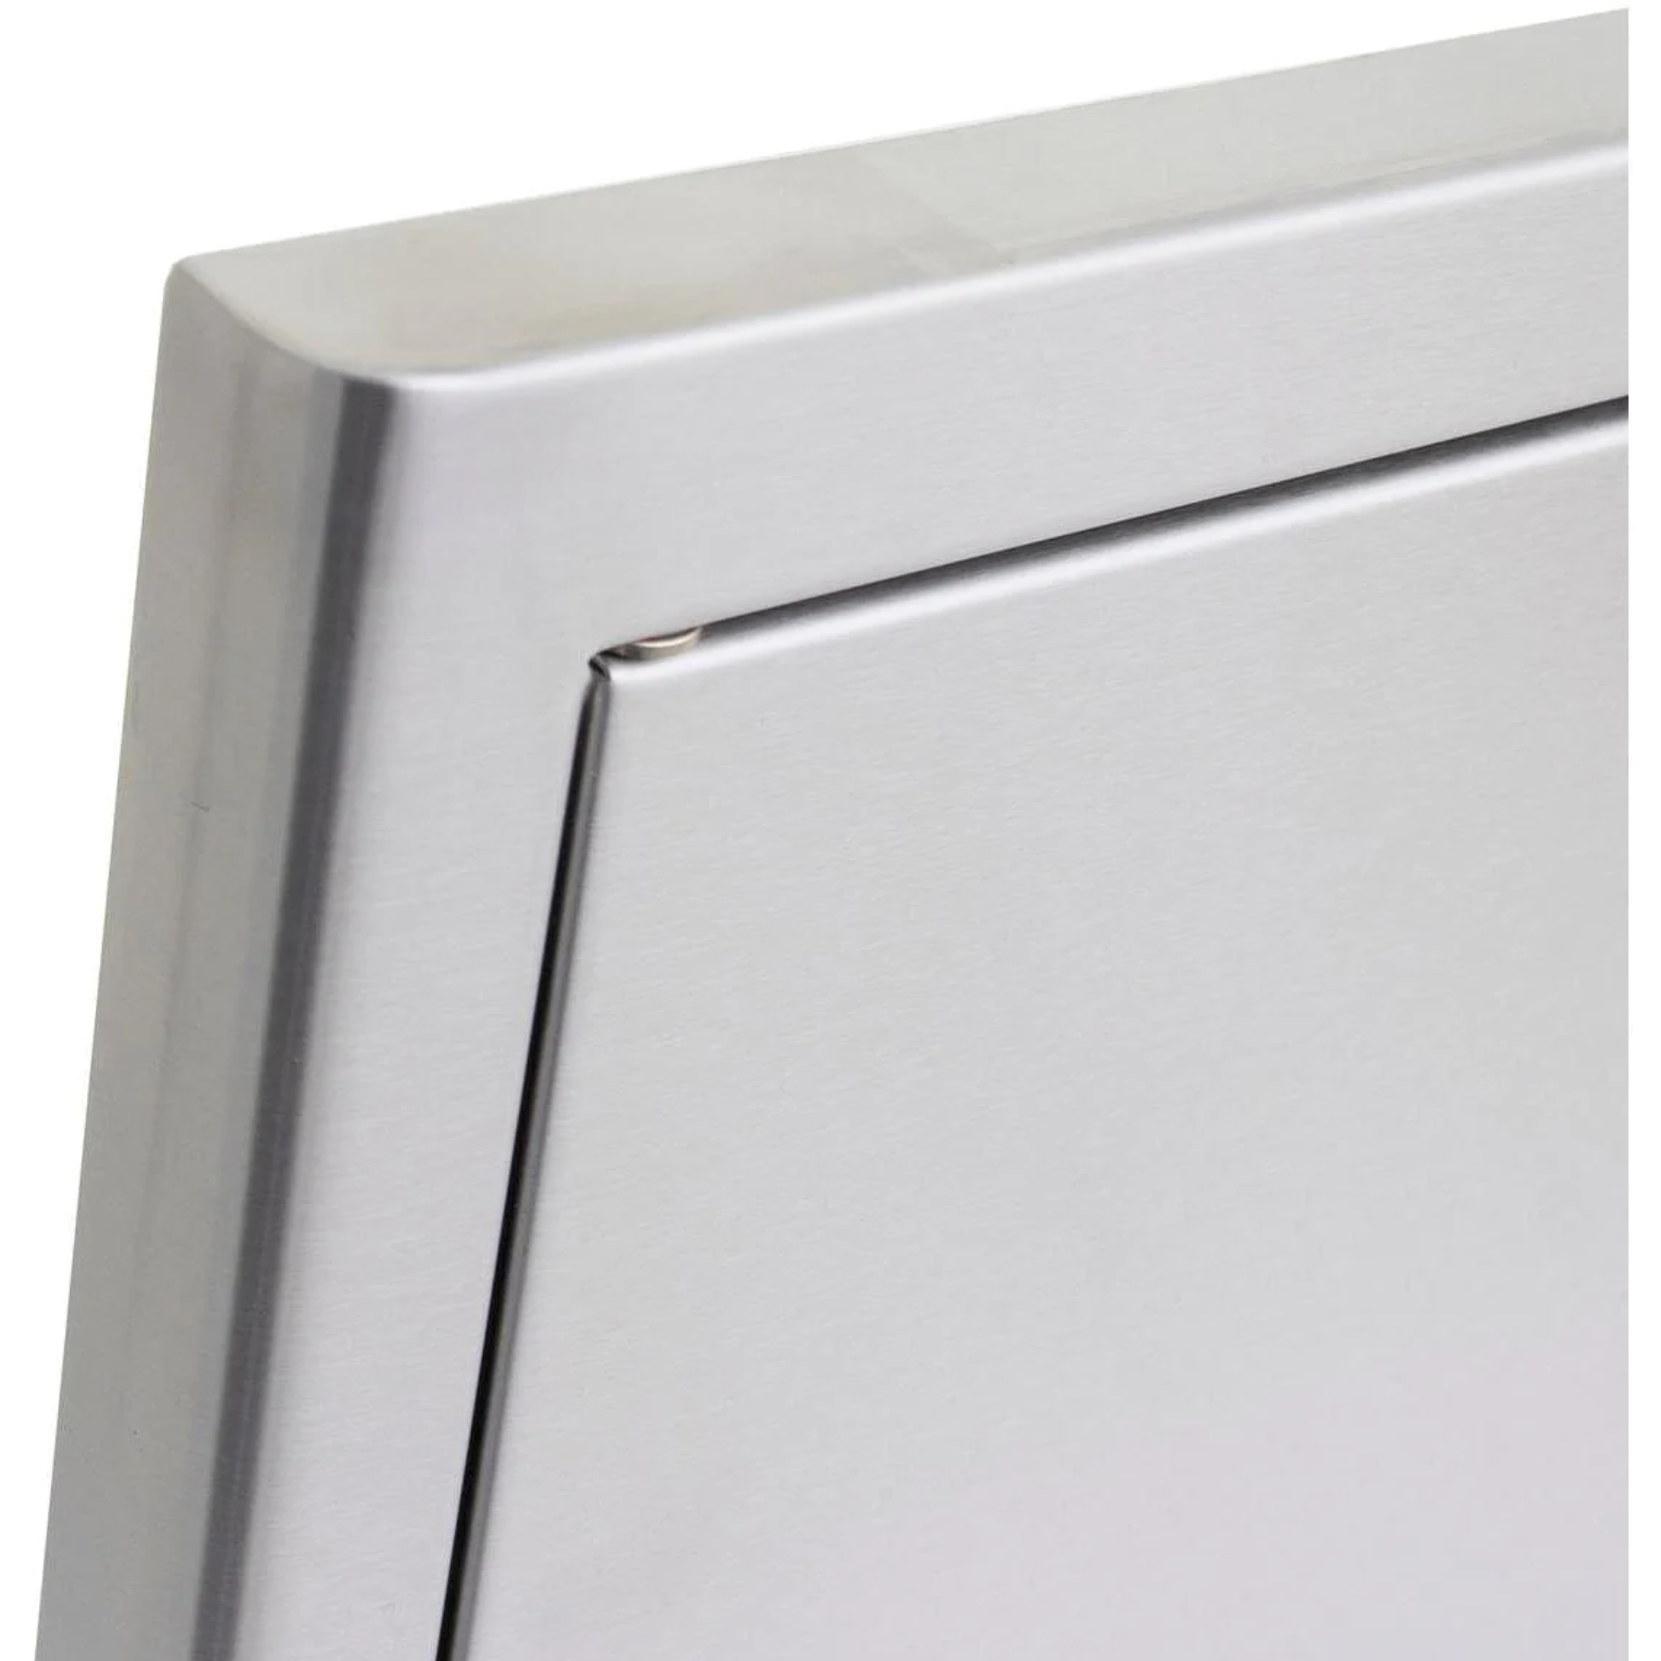 Blaze 40" Stainless Steel Double Access Door With Paper Towel Holder